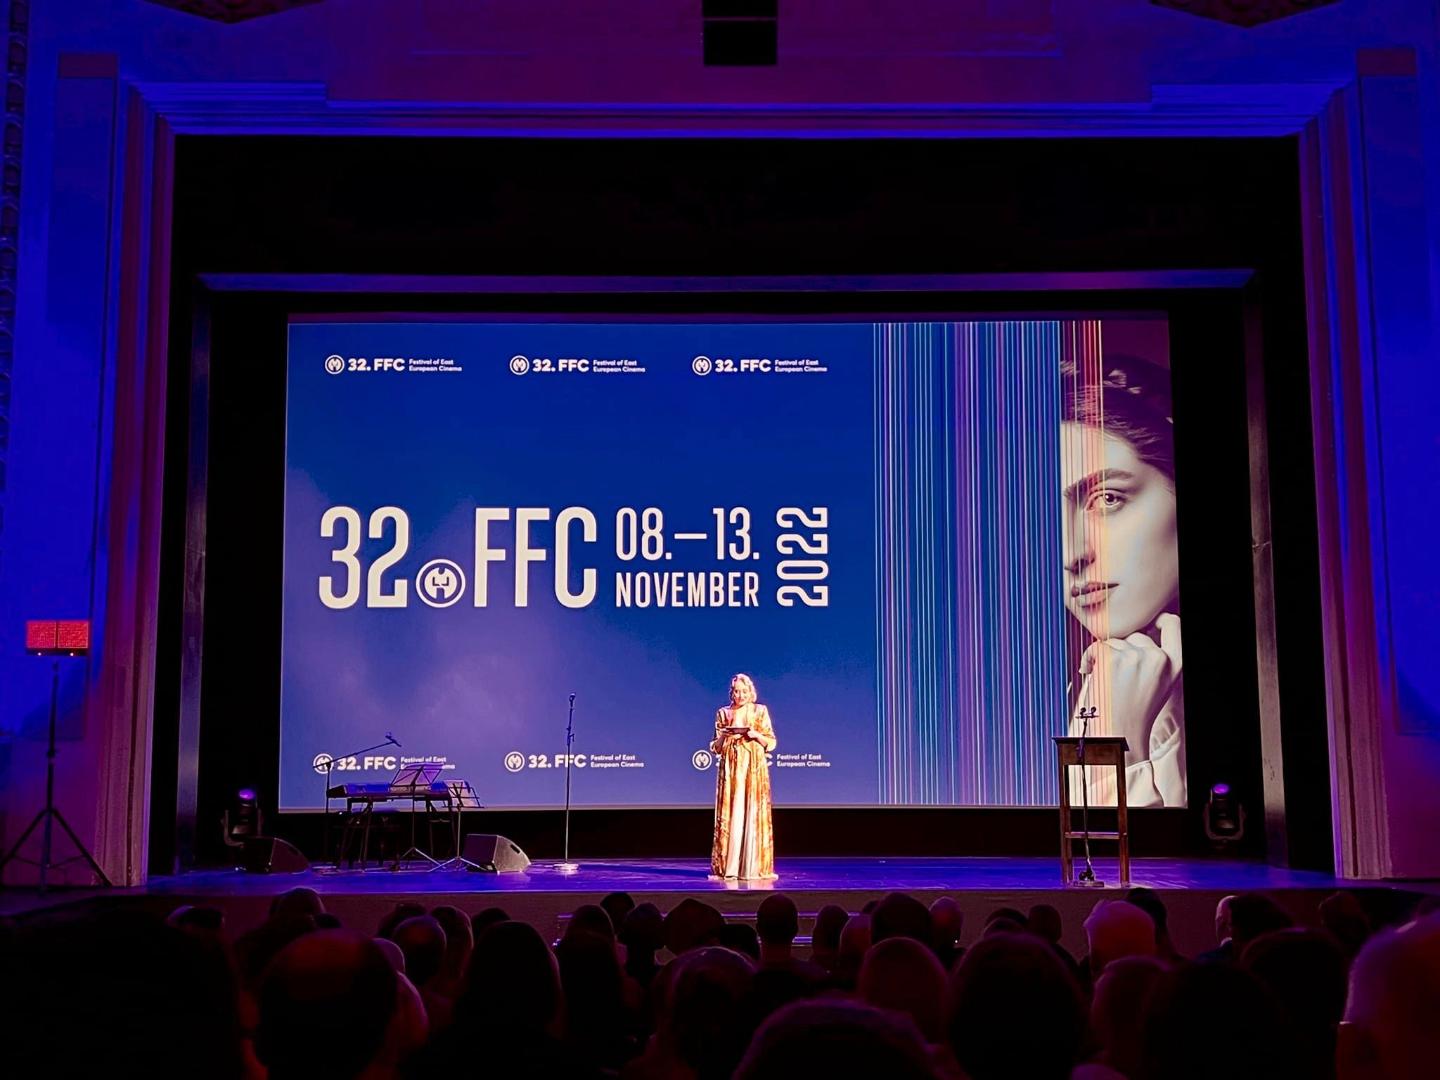 FilmFestival Cottbus - Festivals des osteuropäischen Films